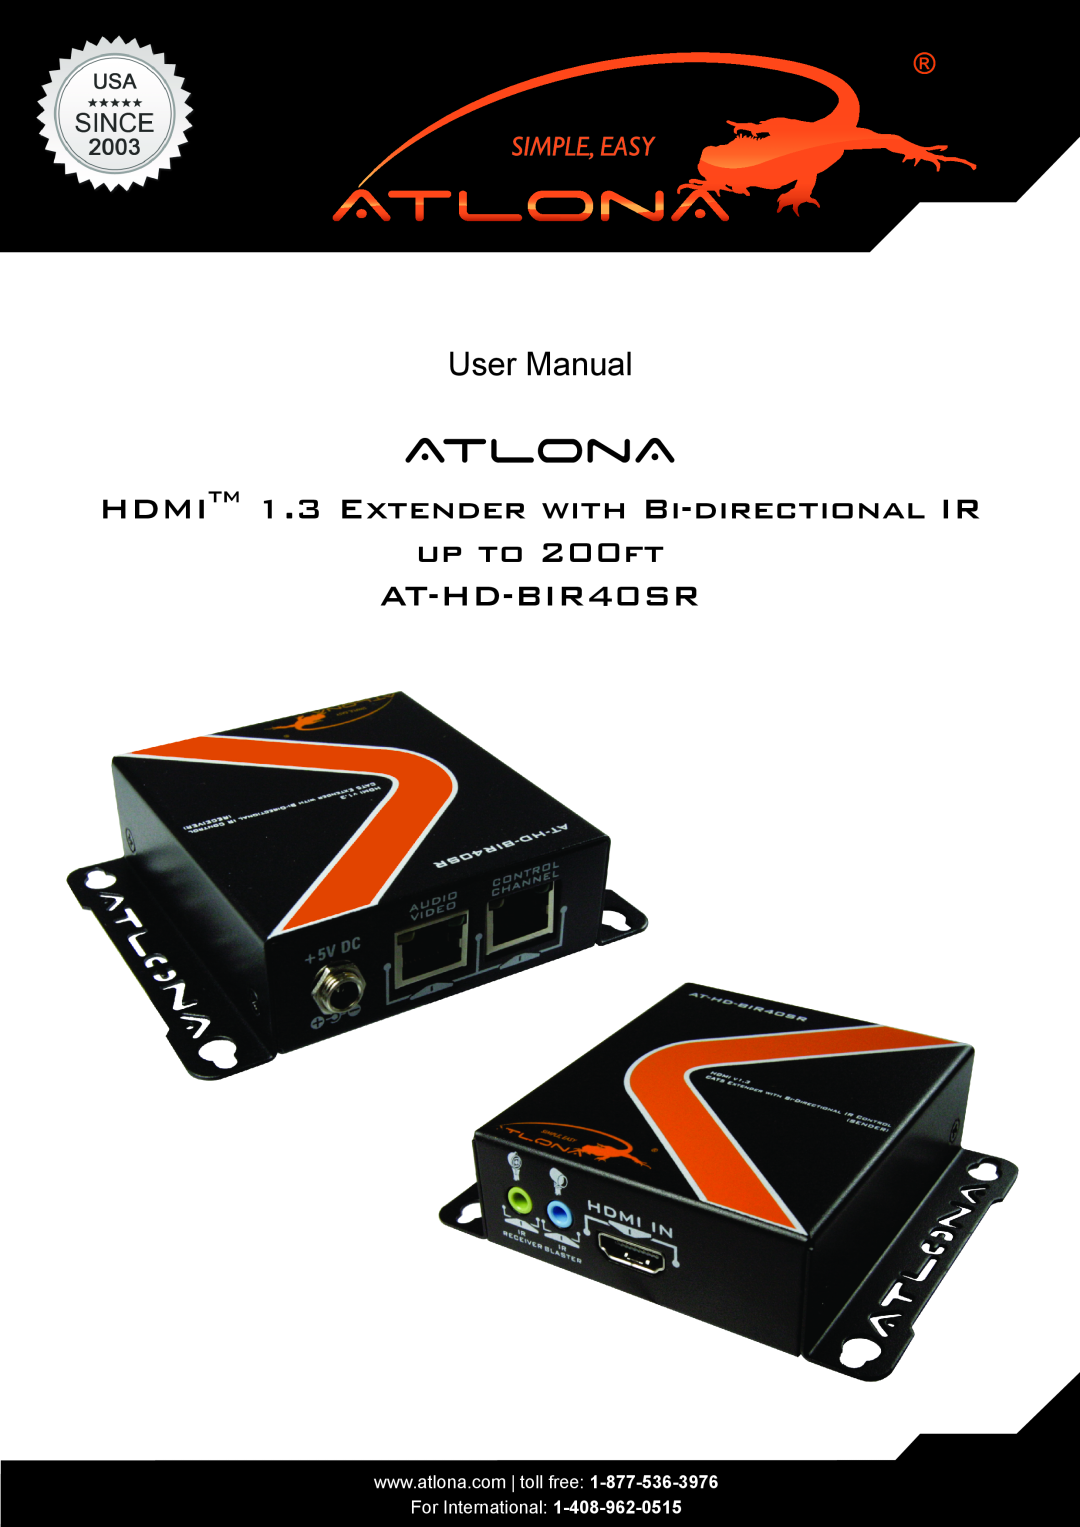 Atlona AT-HD-BIR40SR user manual Atlona, HDMITM 1.3 EXTENDER WITH BI-DIRECTIONAL IR, User Manual, UP TO 200FT 